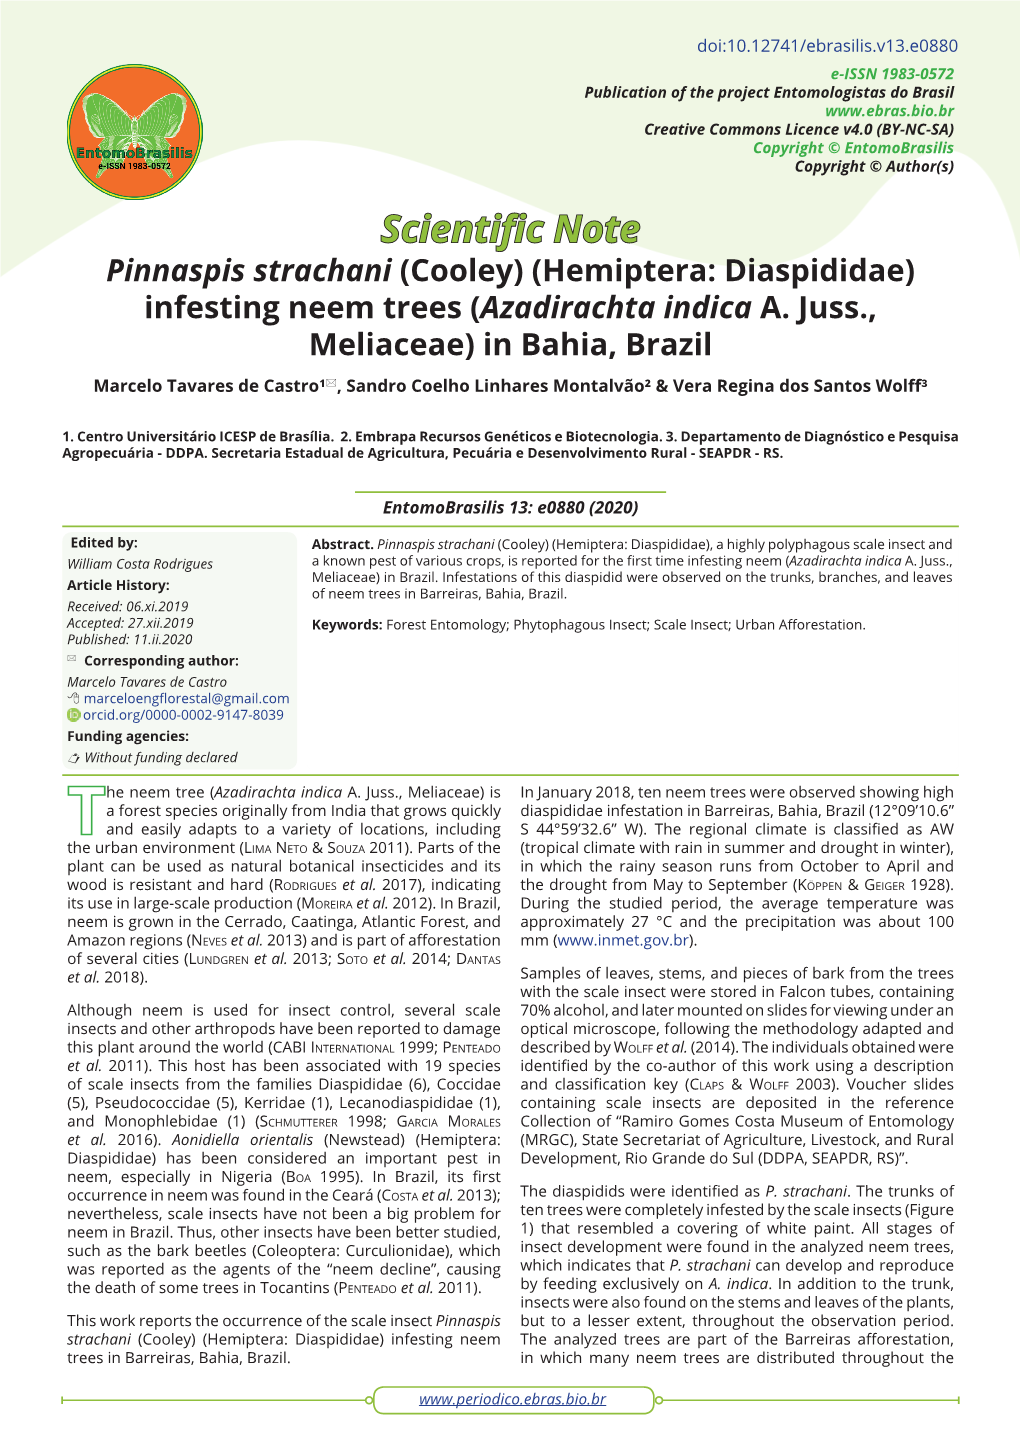 Pinnaspis Strachani (Cooley) (Hemiptera: Diaspididae) Infesting Neem Trees (Azadirachta Indica A